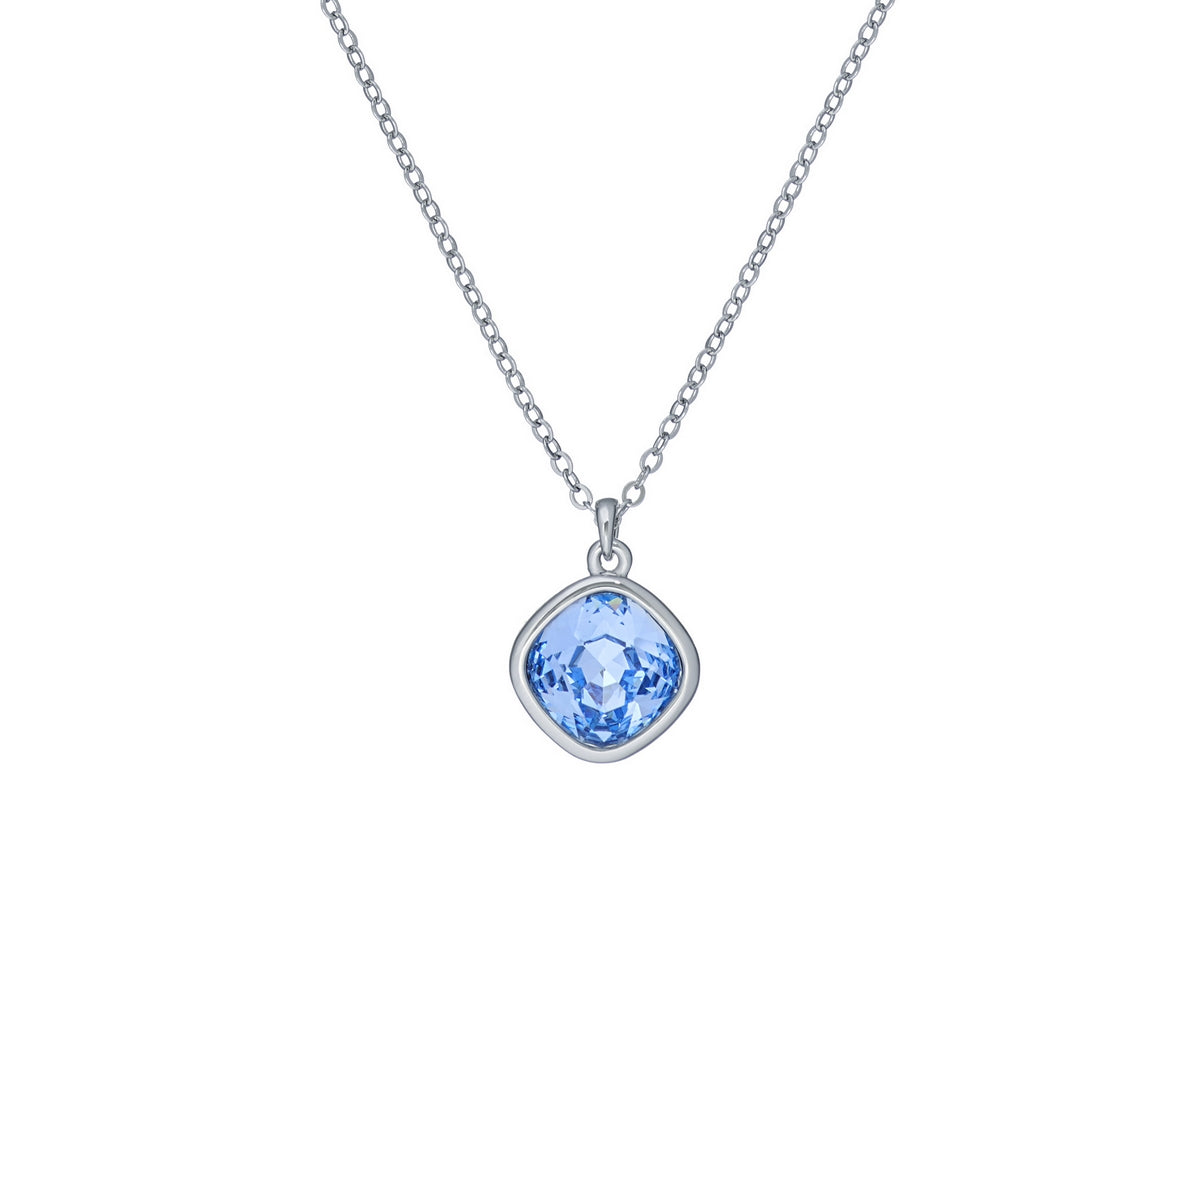 ted baker crastel: crystal pendant necklace silver tone, light blue crystal